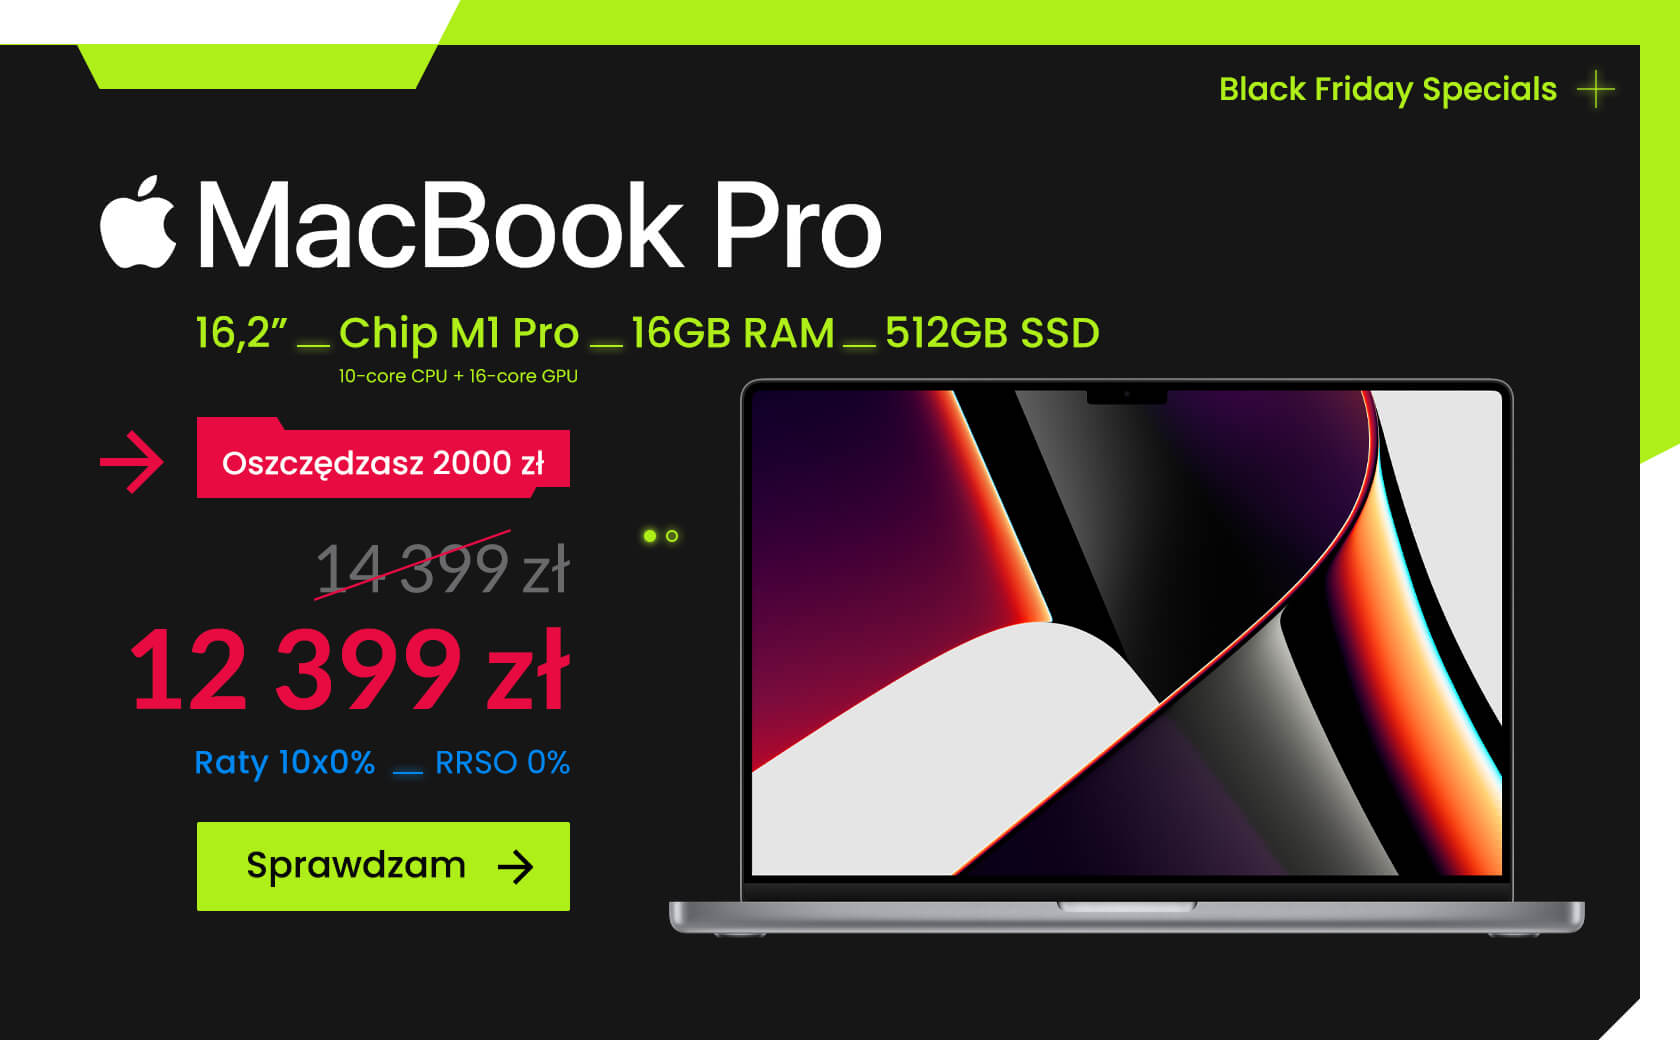 Black Friday Specials - MacBook Pro 16